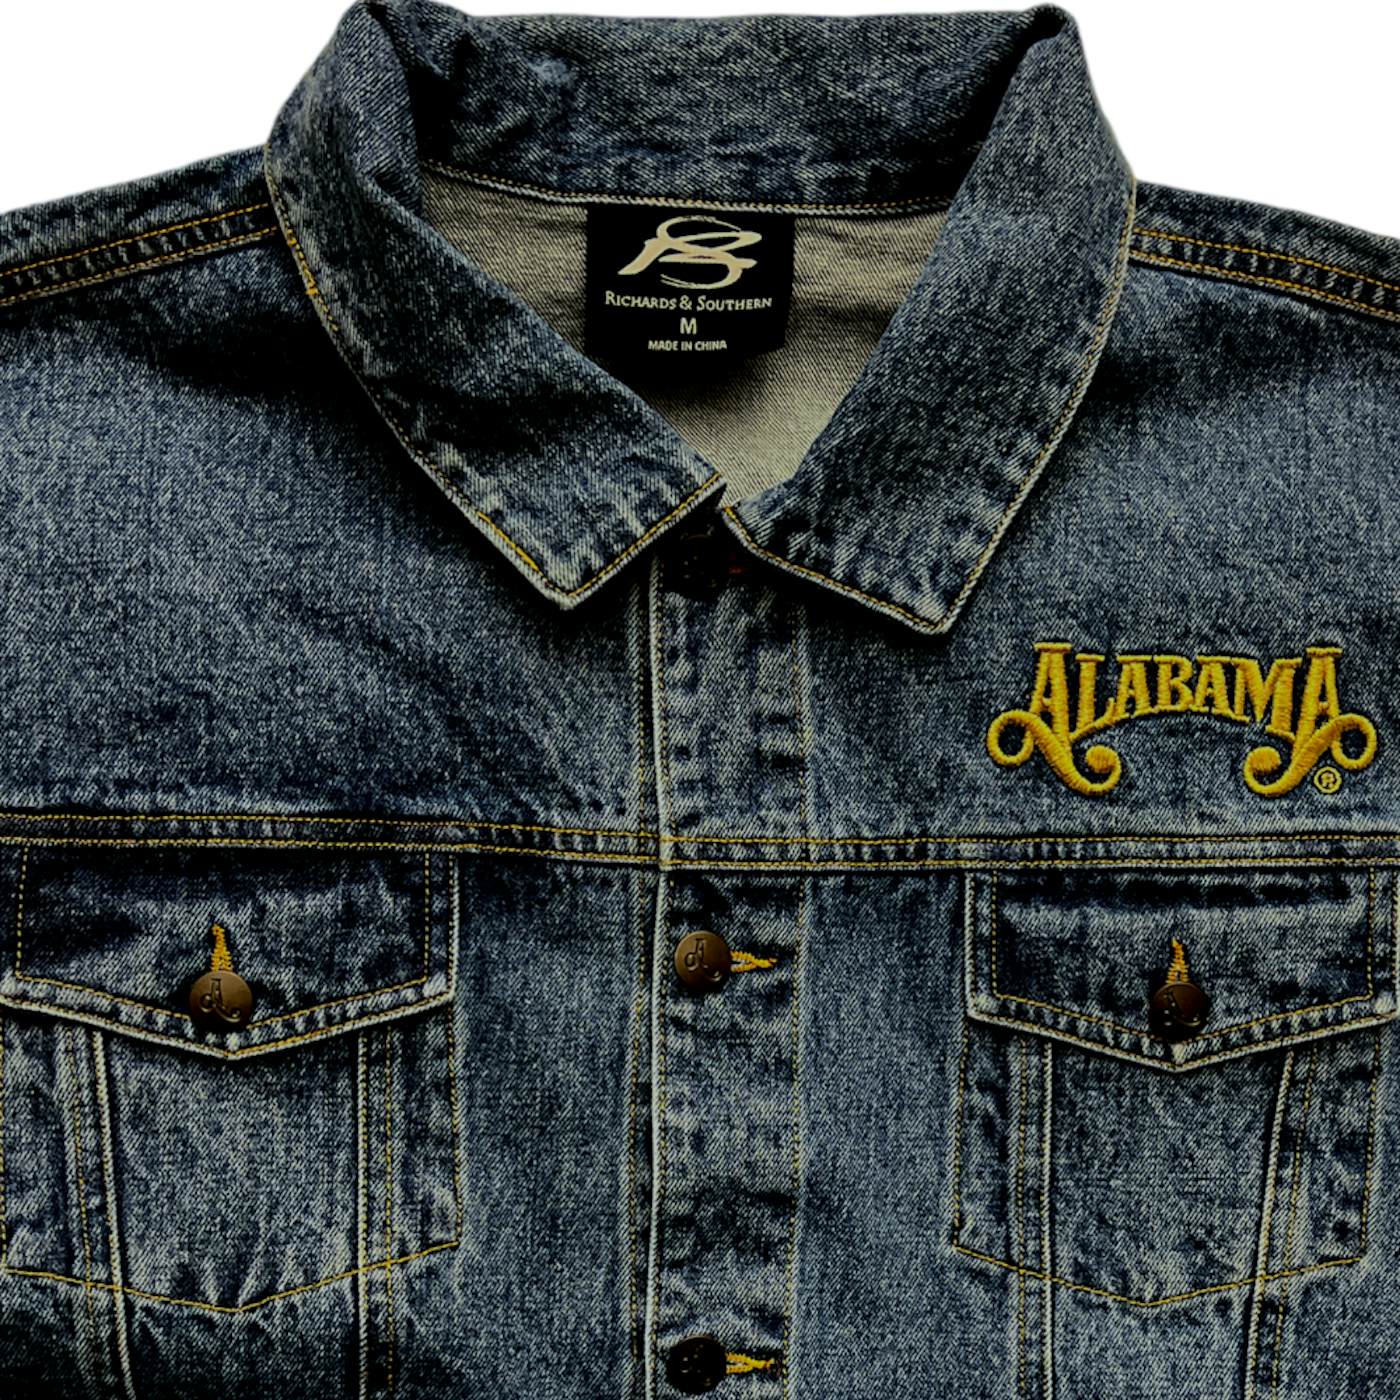 Alabama Denim Jacket